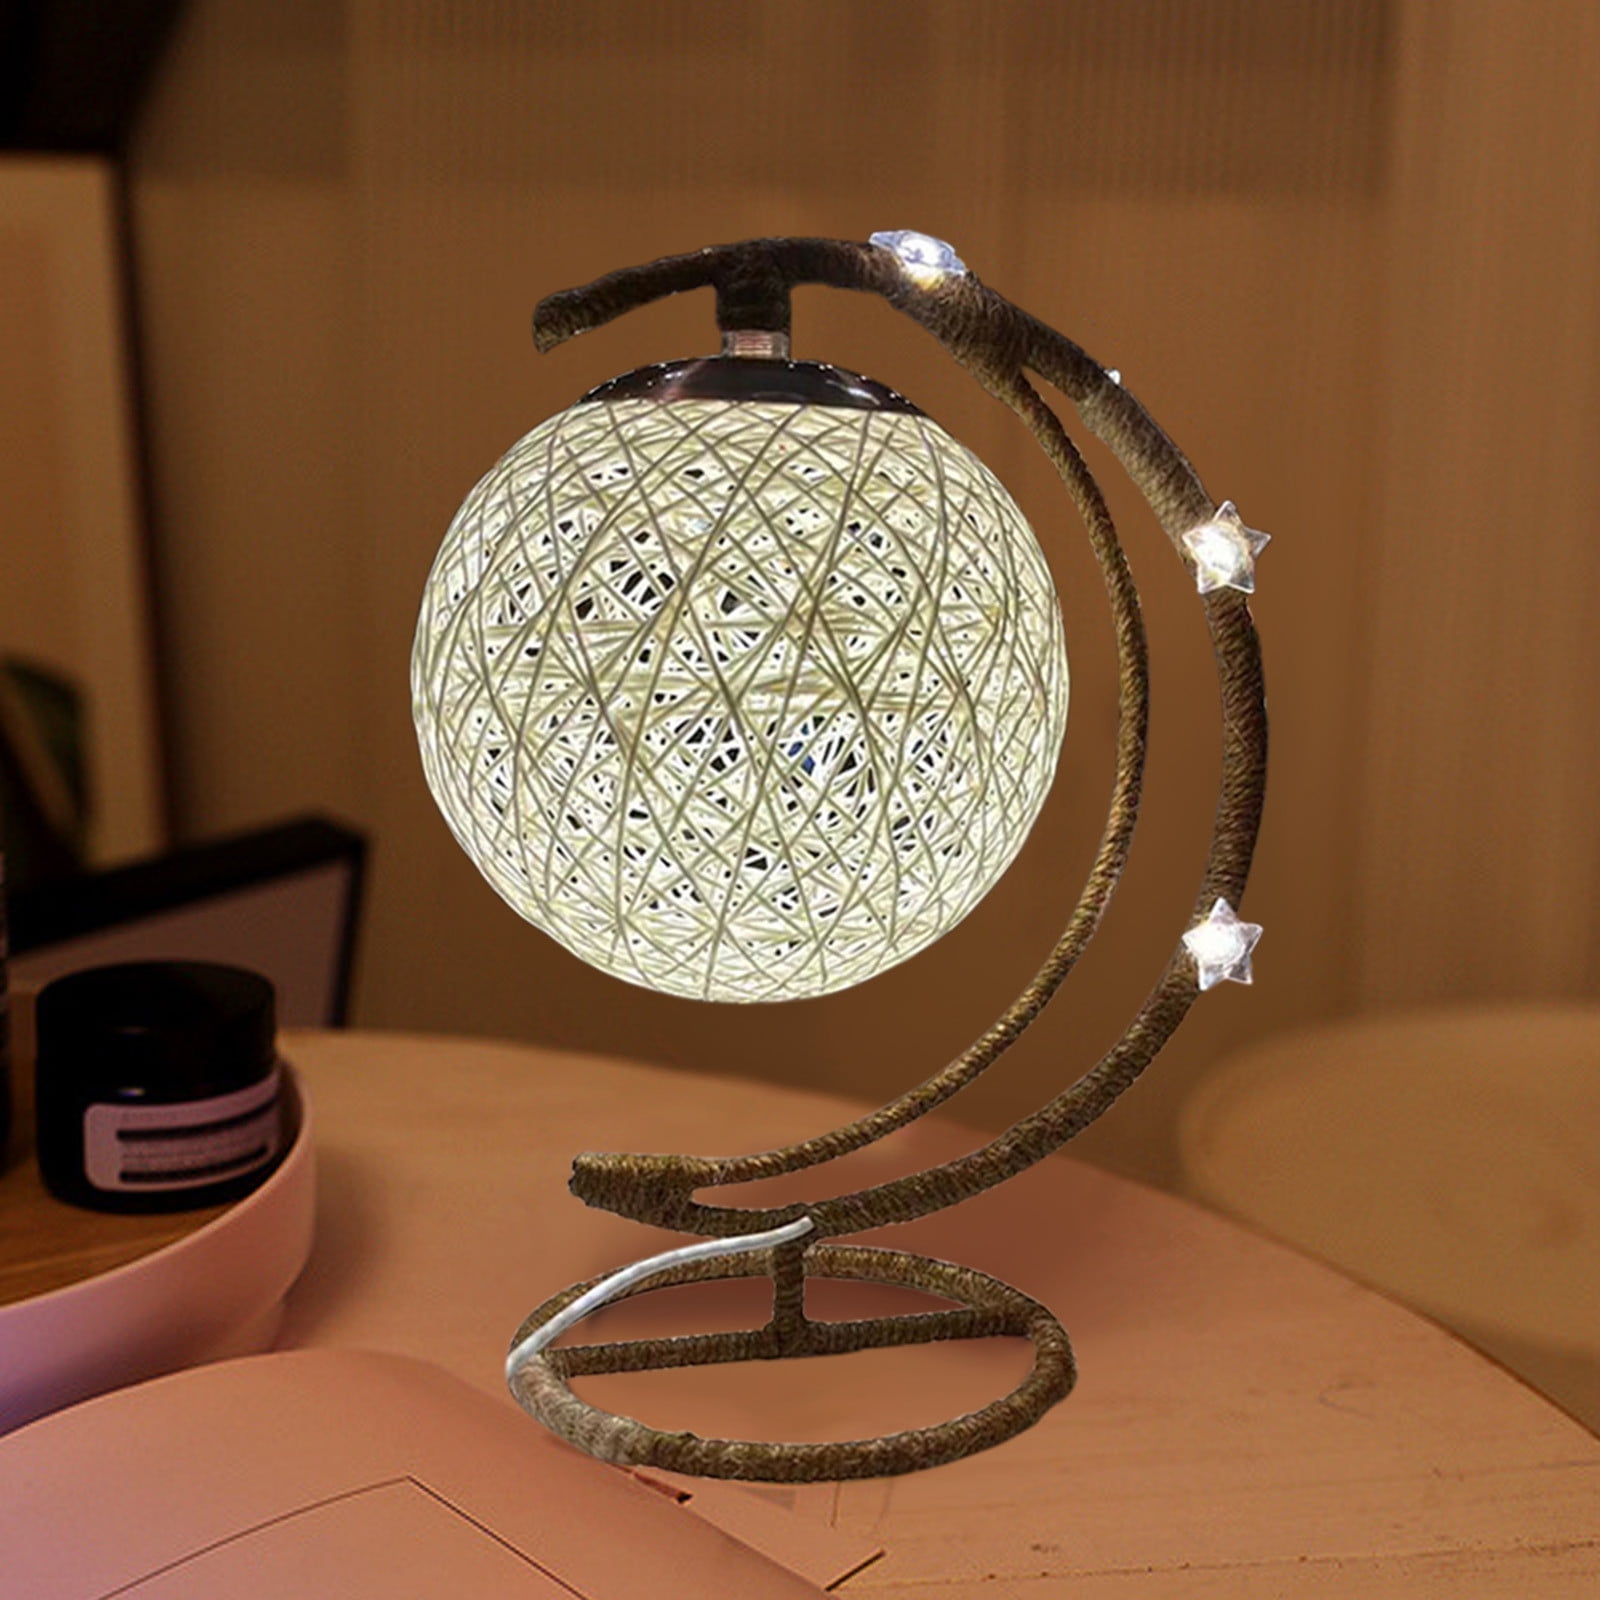 LED Ramadan Decorative Table Lamp (16 Colors) with Remote – Unique Occasion